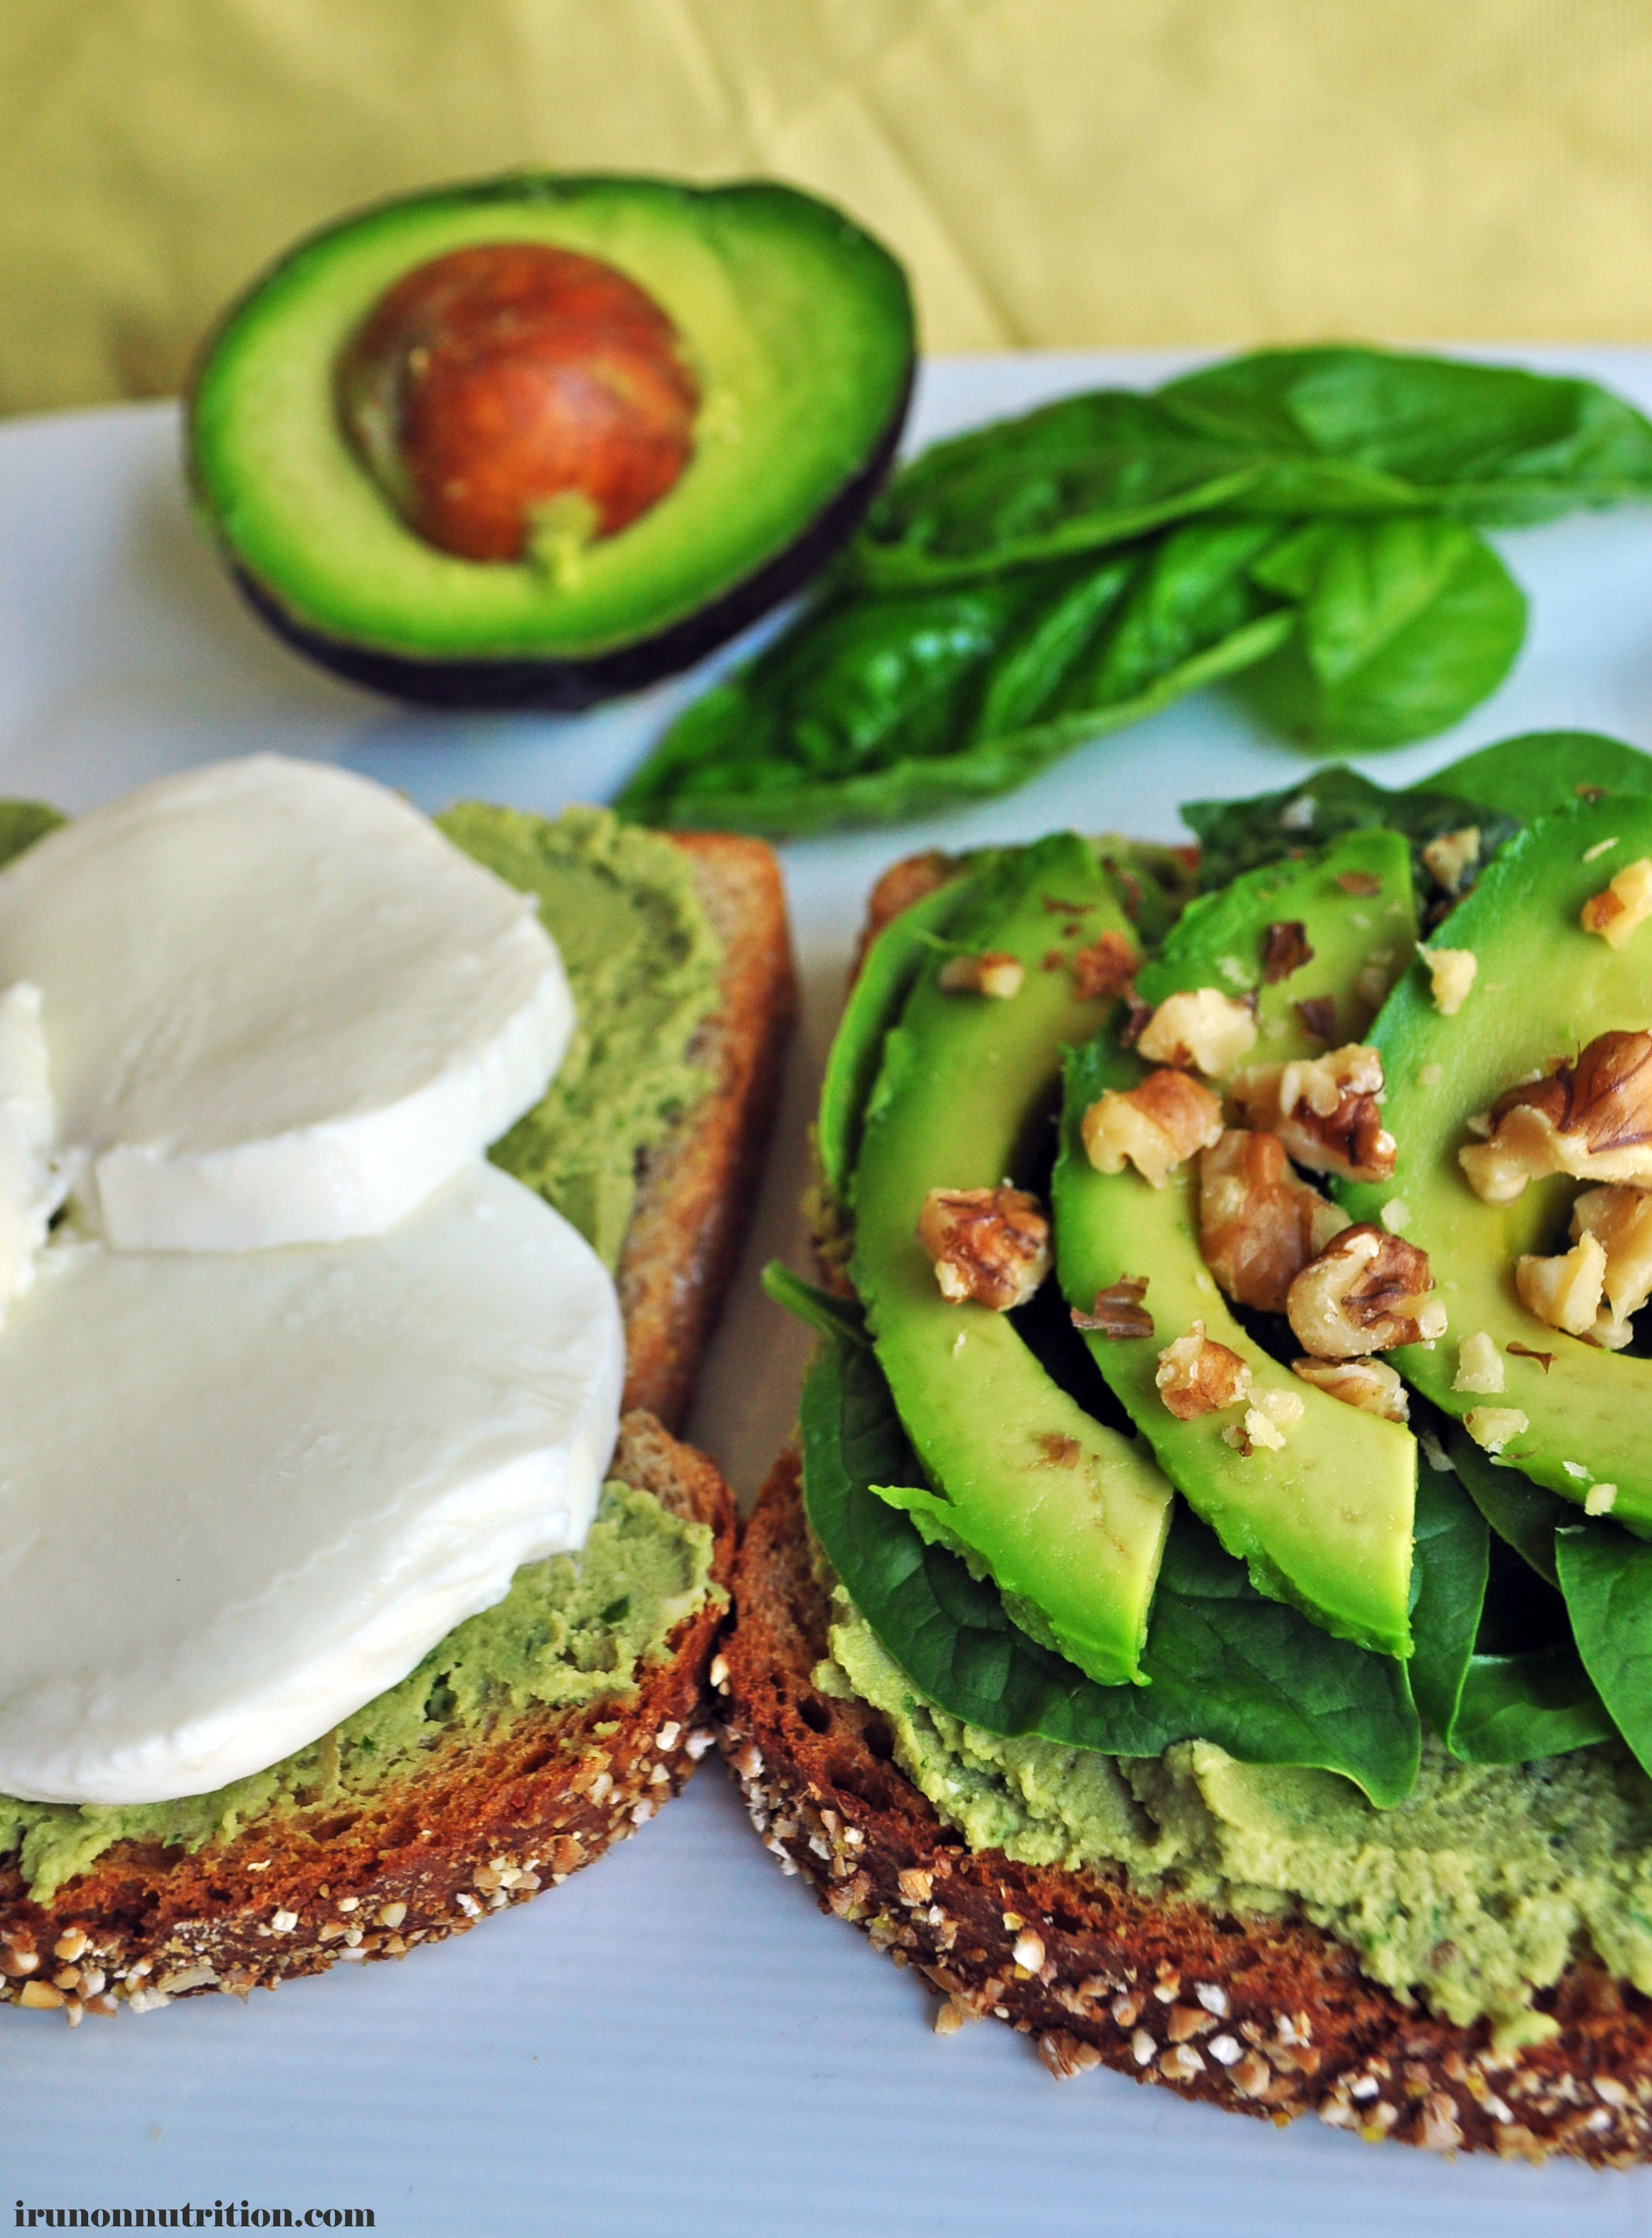 Бутерброды с авокадо на завтрак рецепты с фото пошагово